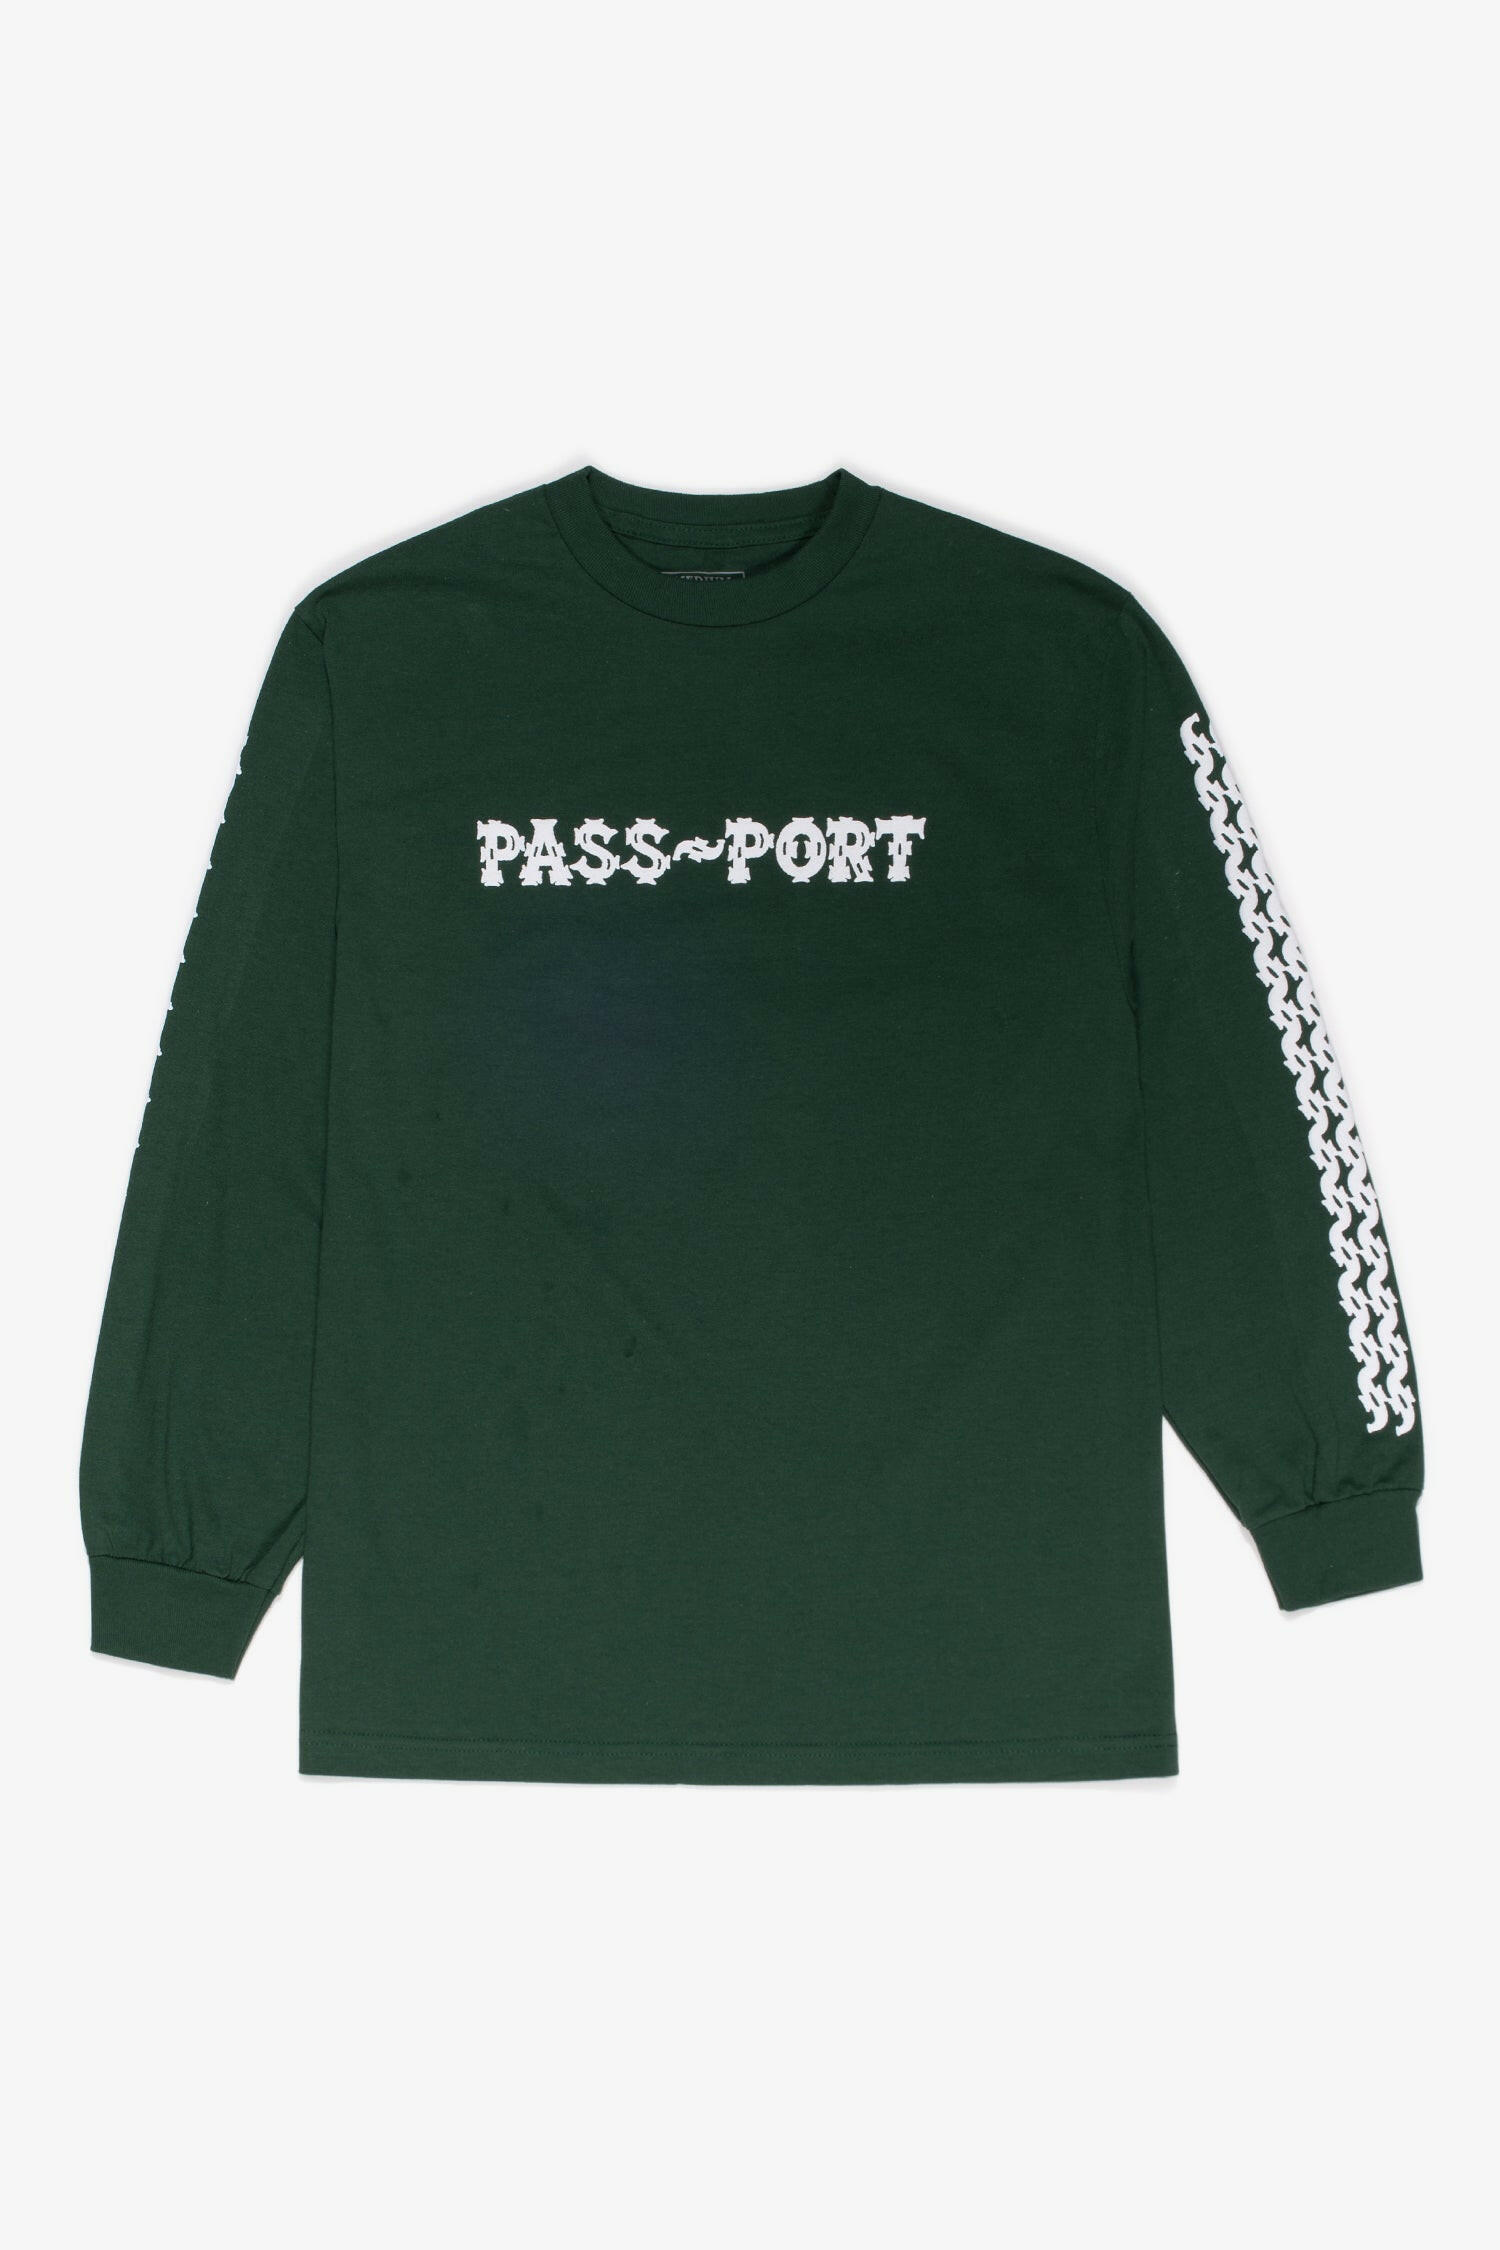 Selectshop FRAME - PASS-PORT Barbs Long Sleeve T-Shirt Dubai